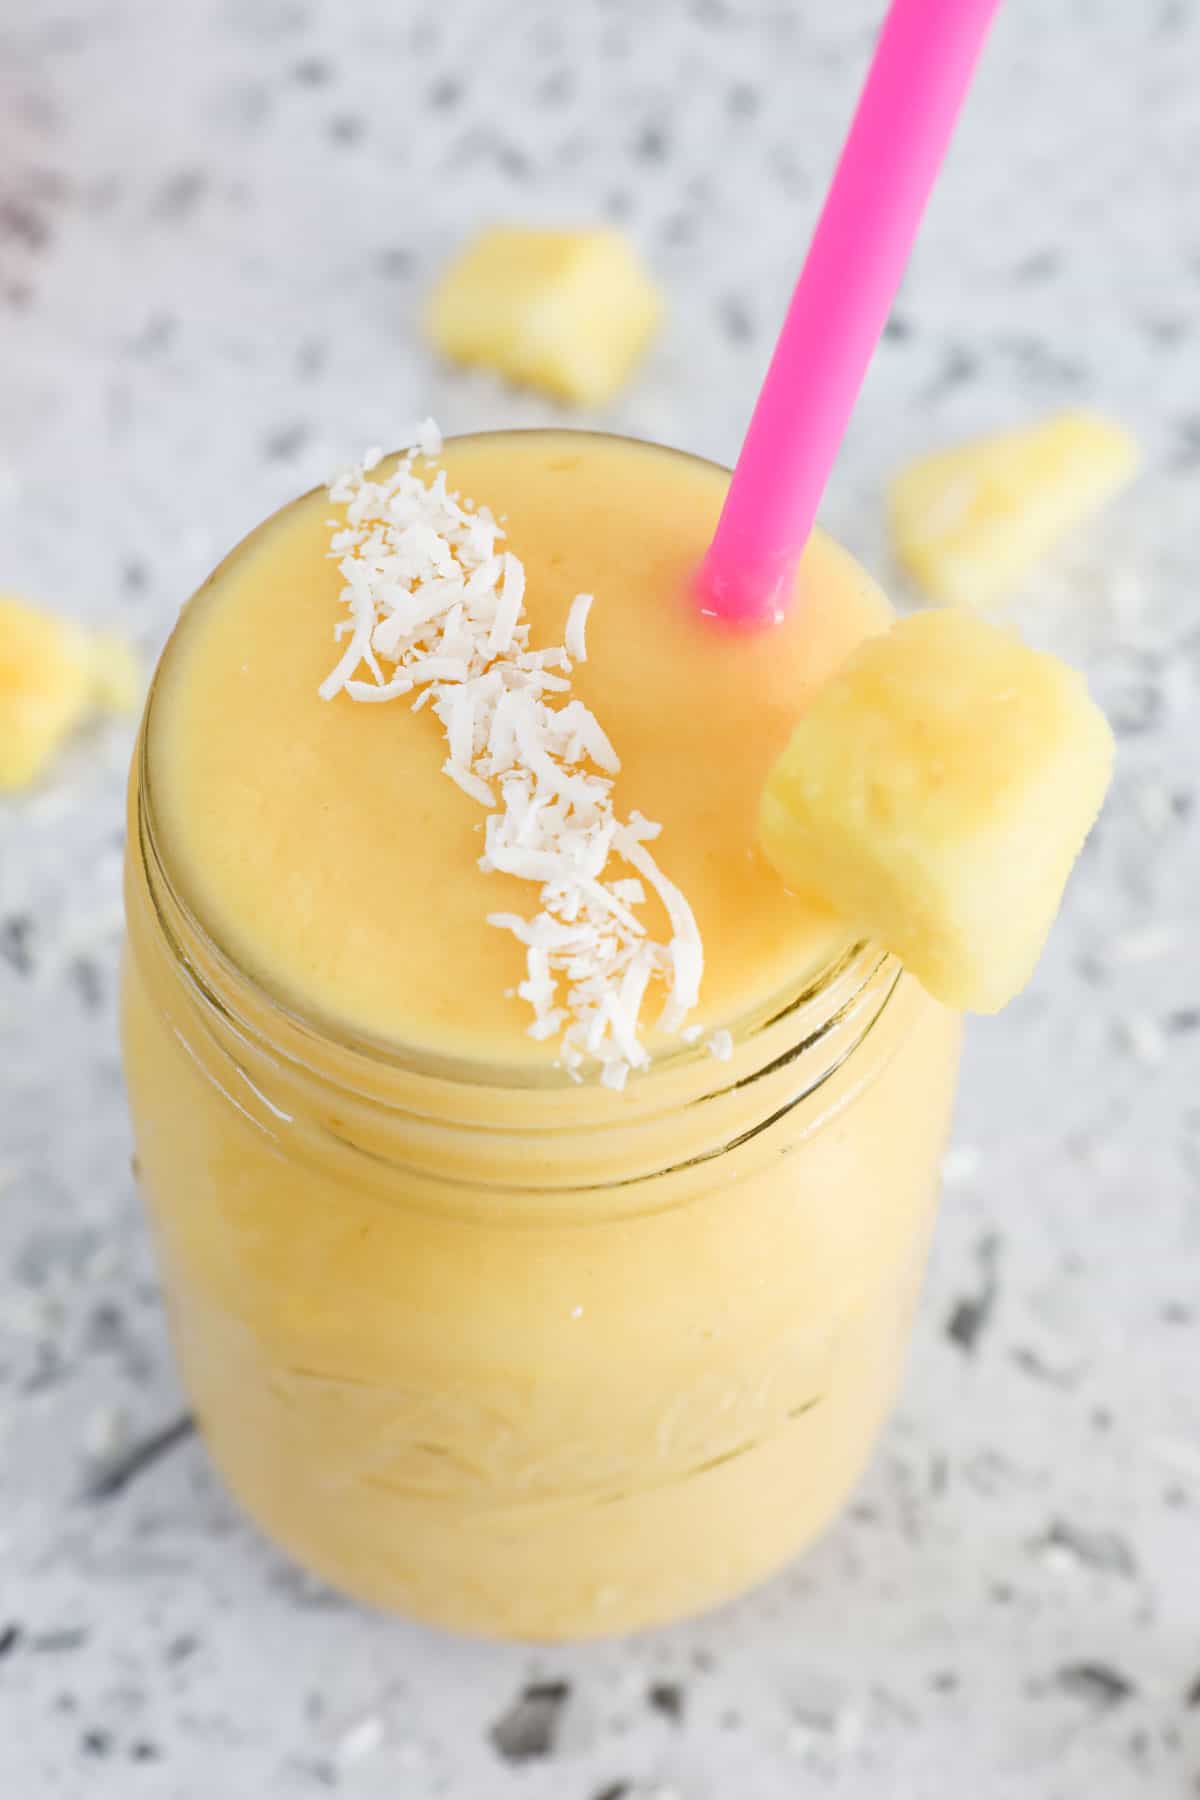 A creamy breakfast fruit drink in a glass jar with a straw.